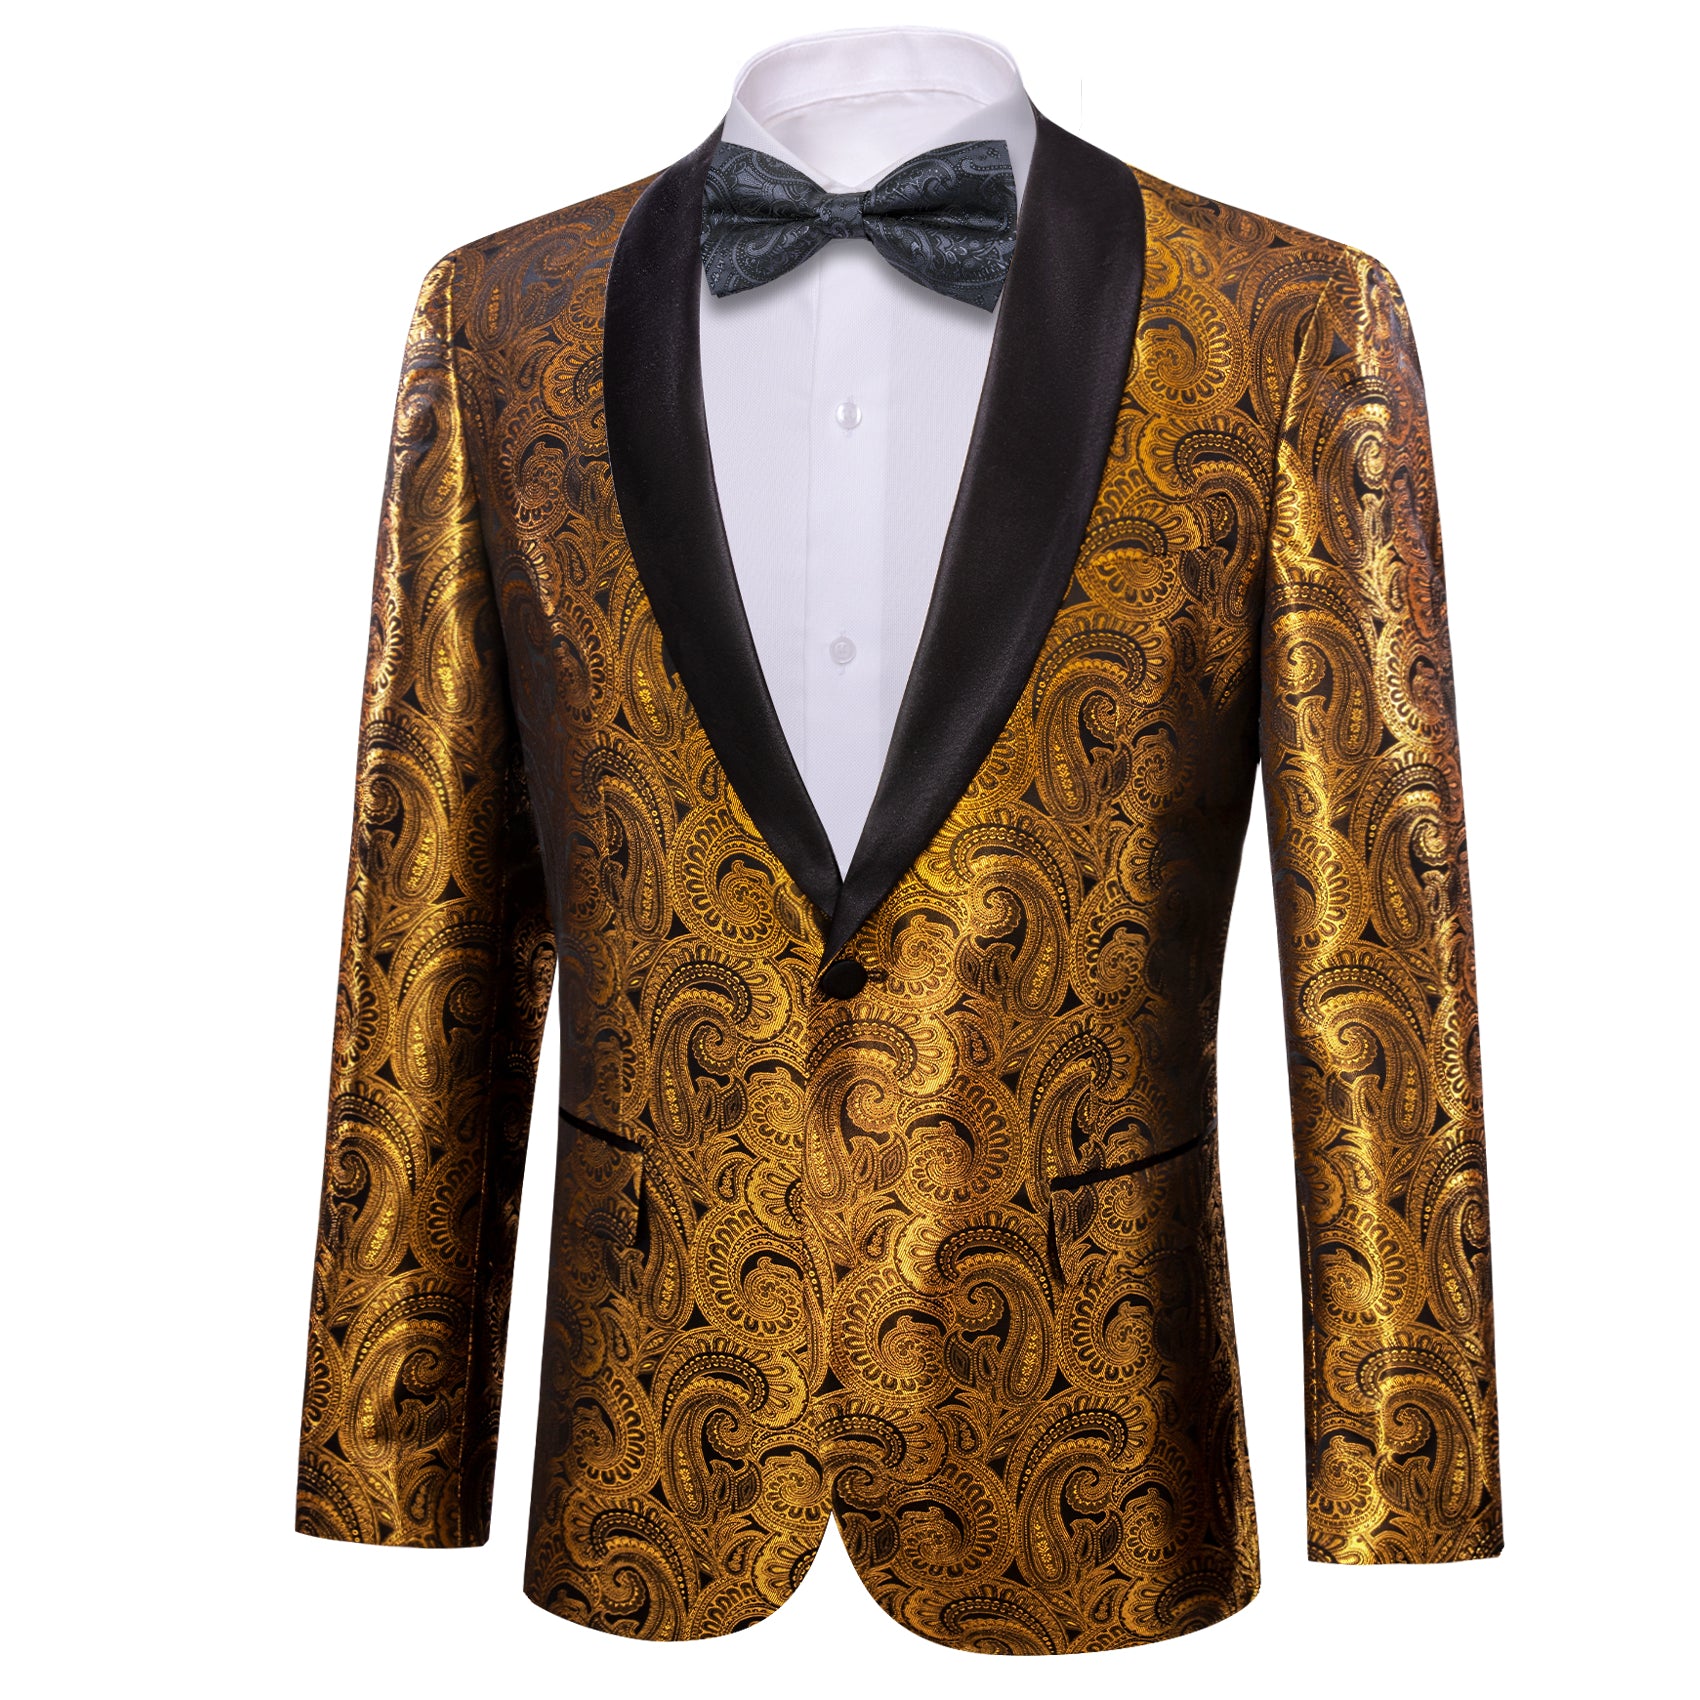 Men's Dress Party Brown Gold Floral Suit Jacket Slim One Button Stylish Blazer